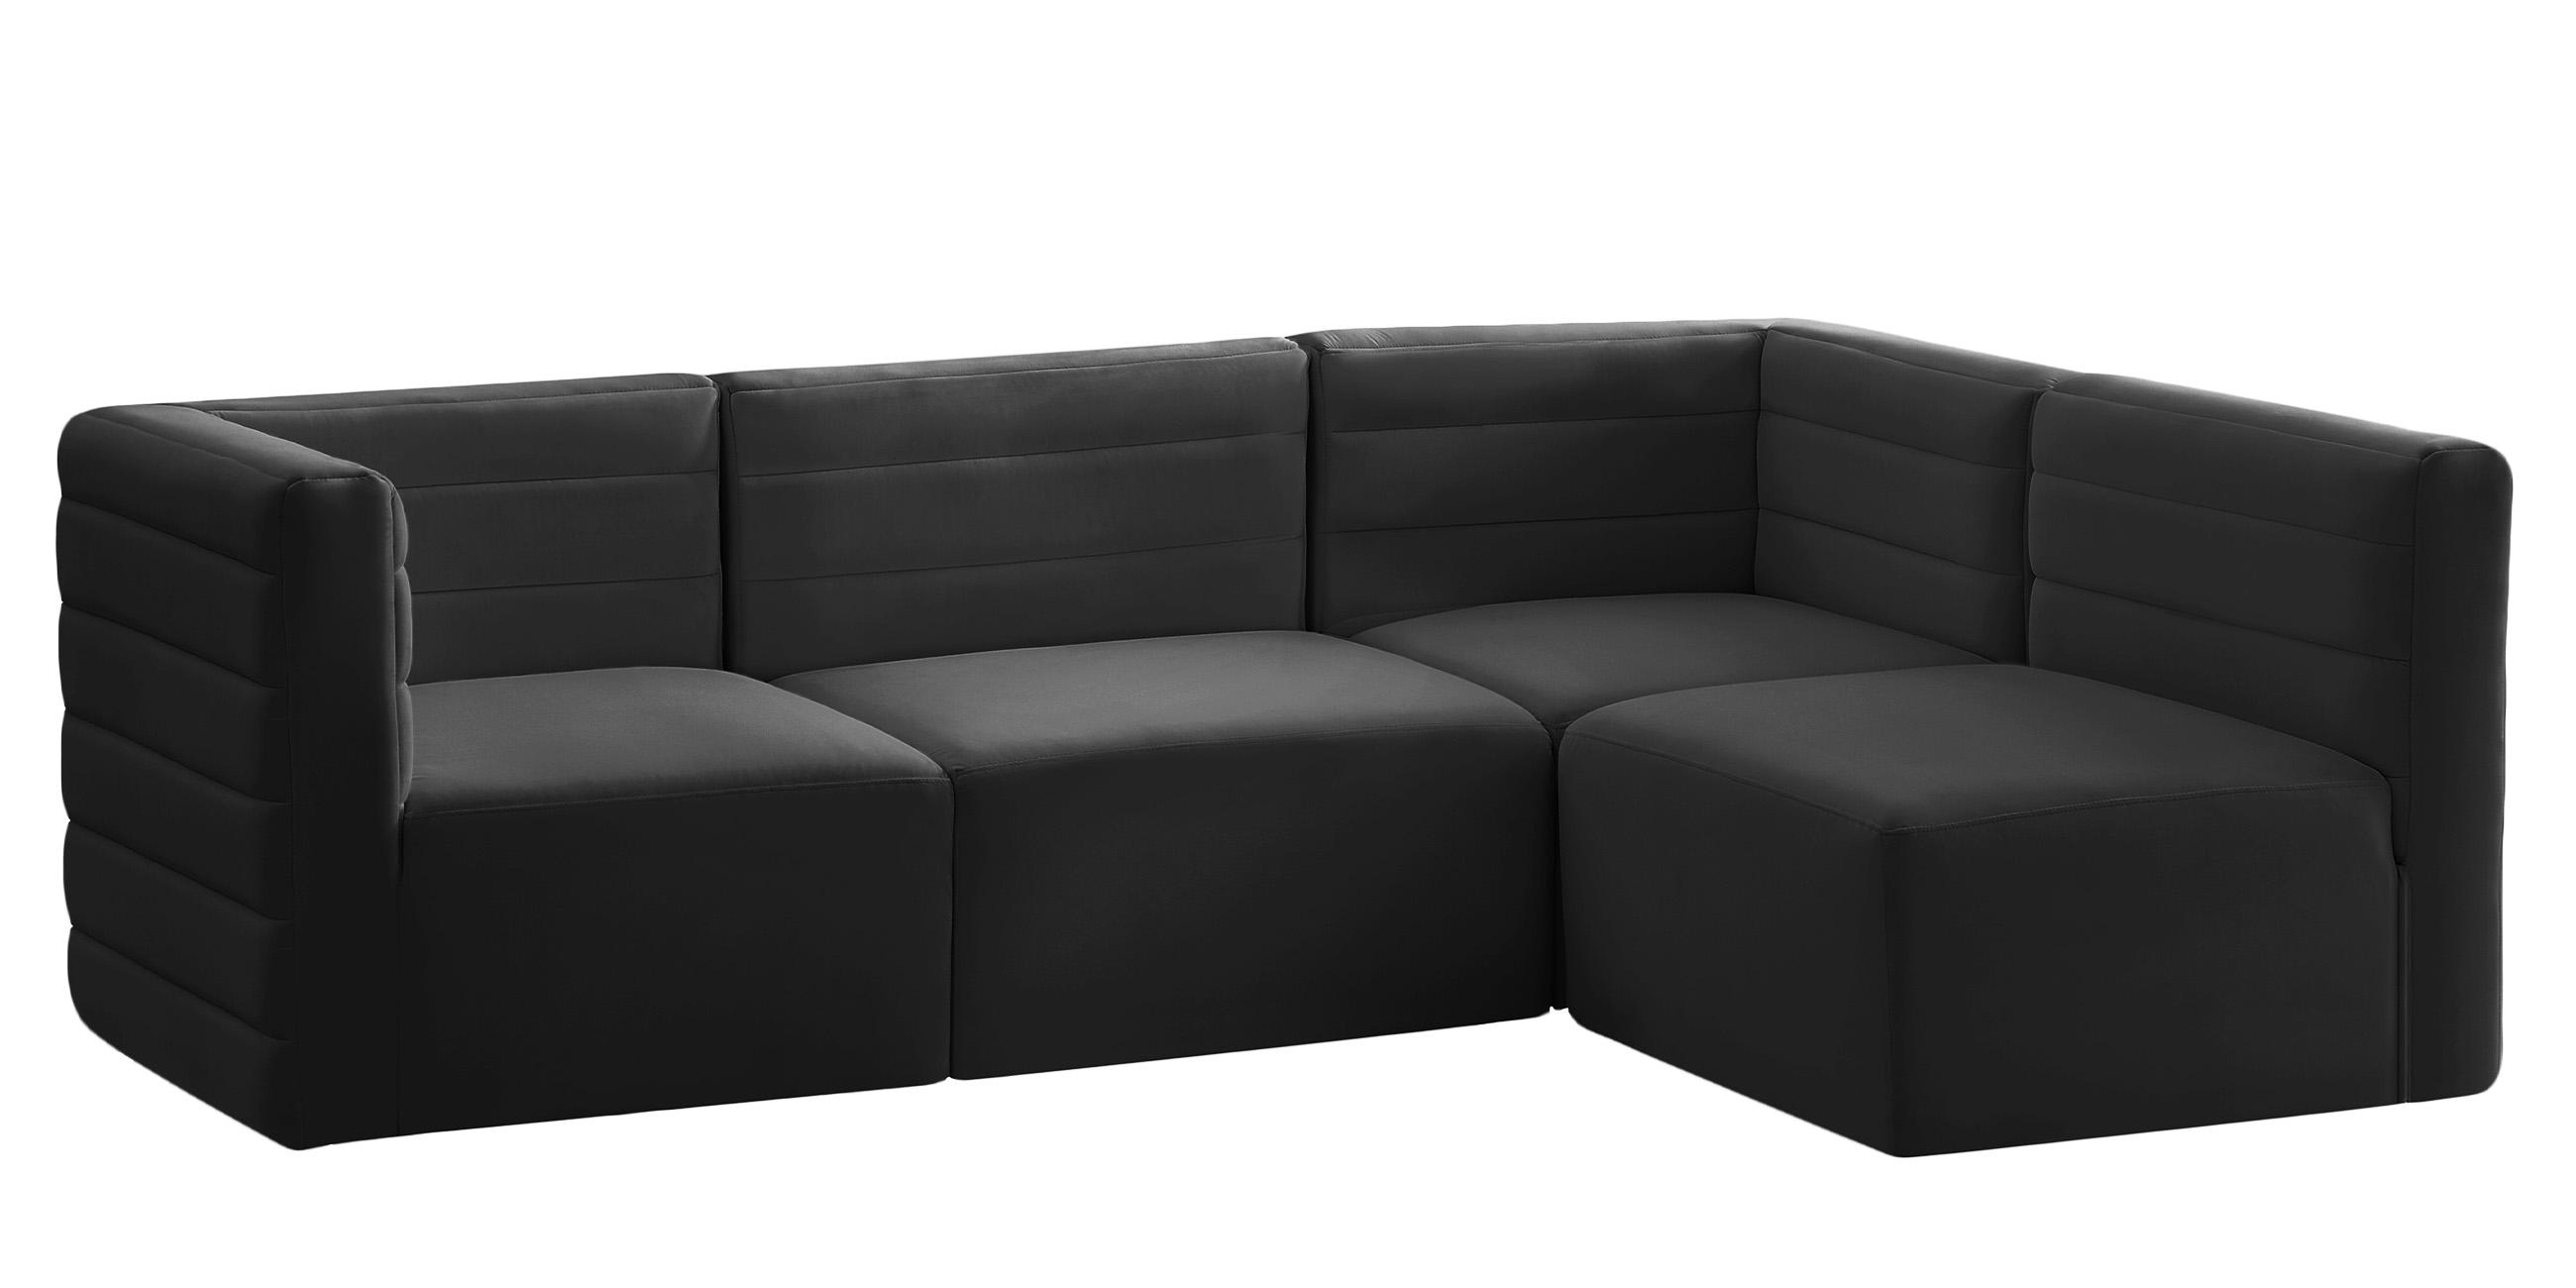 Contemporary, Modern Modular Sectional Sofa Quincy 677Black-Sec4A 677Black-Sec4A in Black Velvet